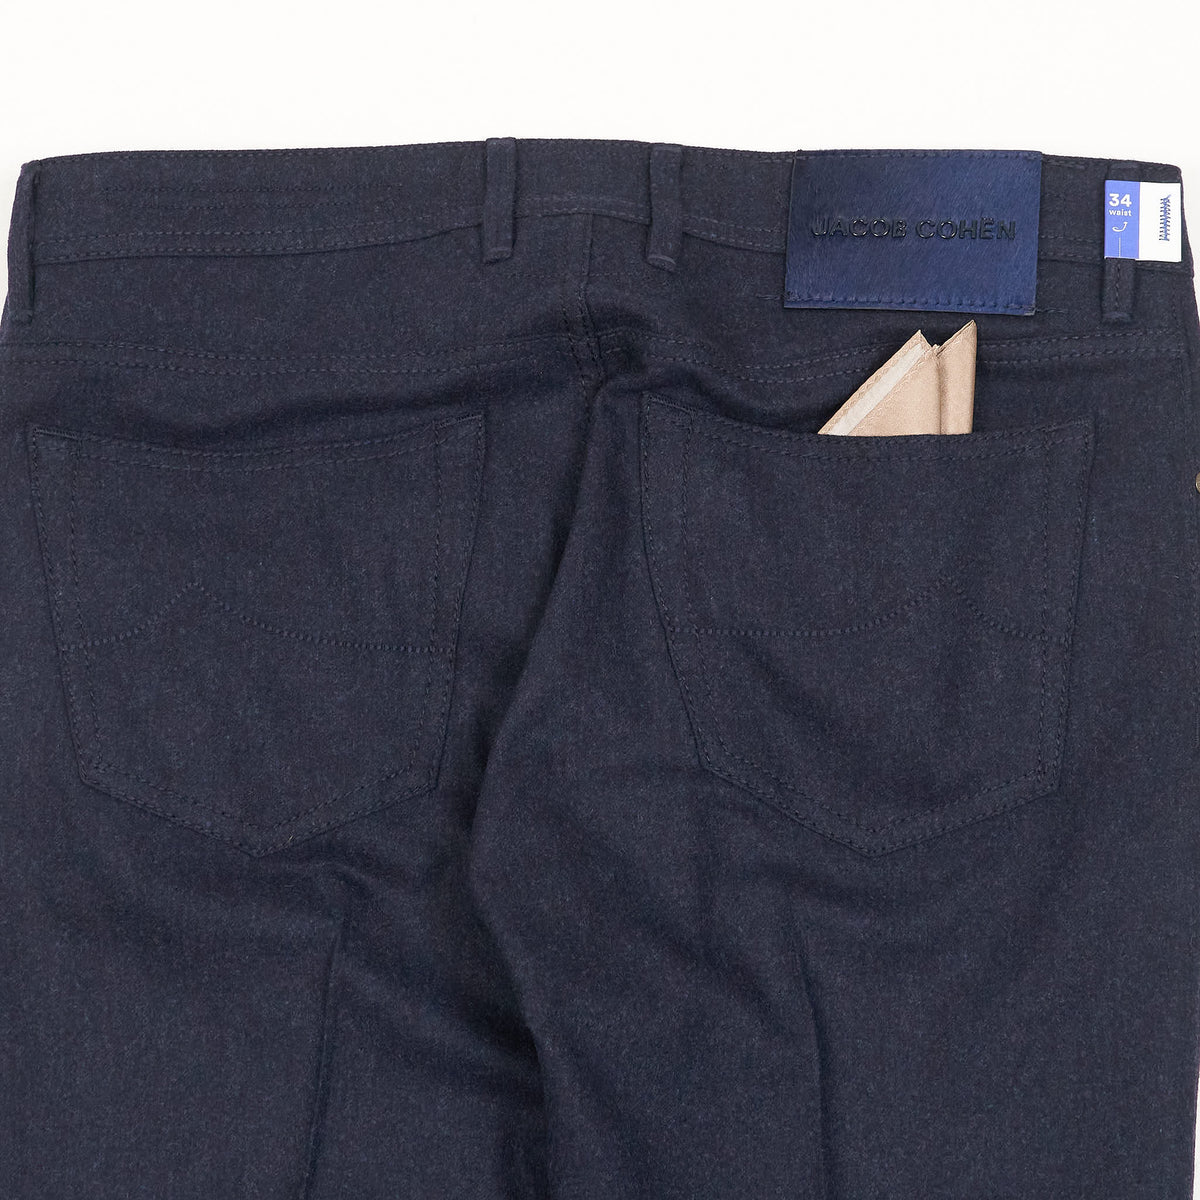 Jacob Cohen 5 Pocket Slim Fit Wool Blend Jeans